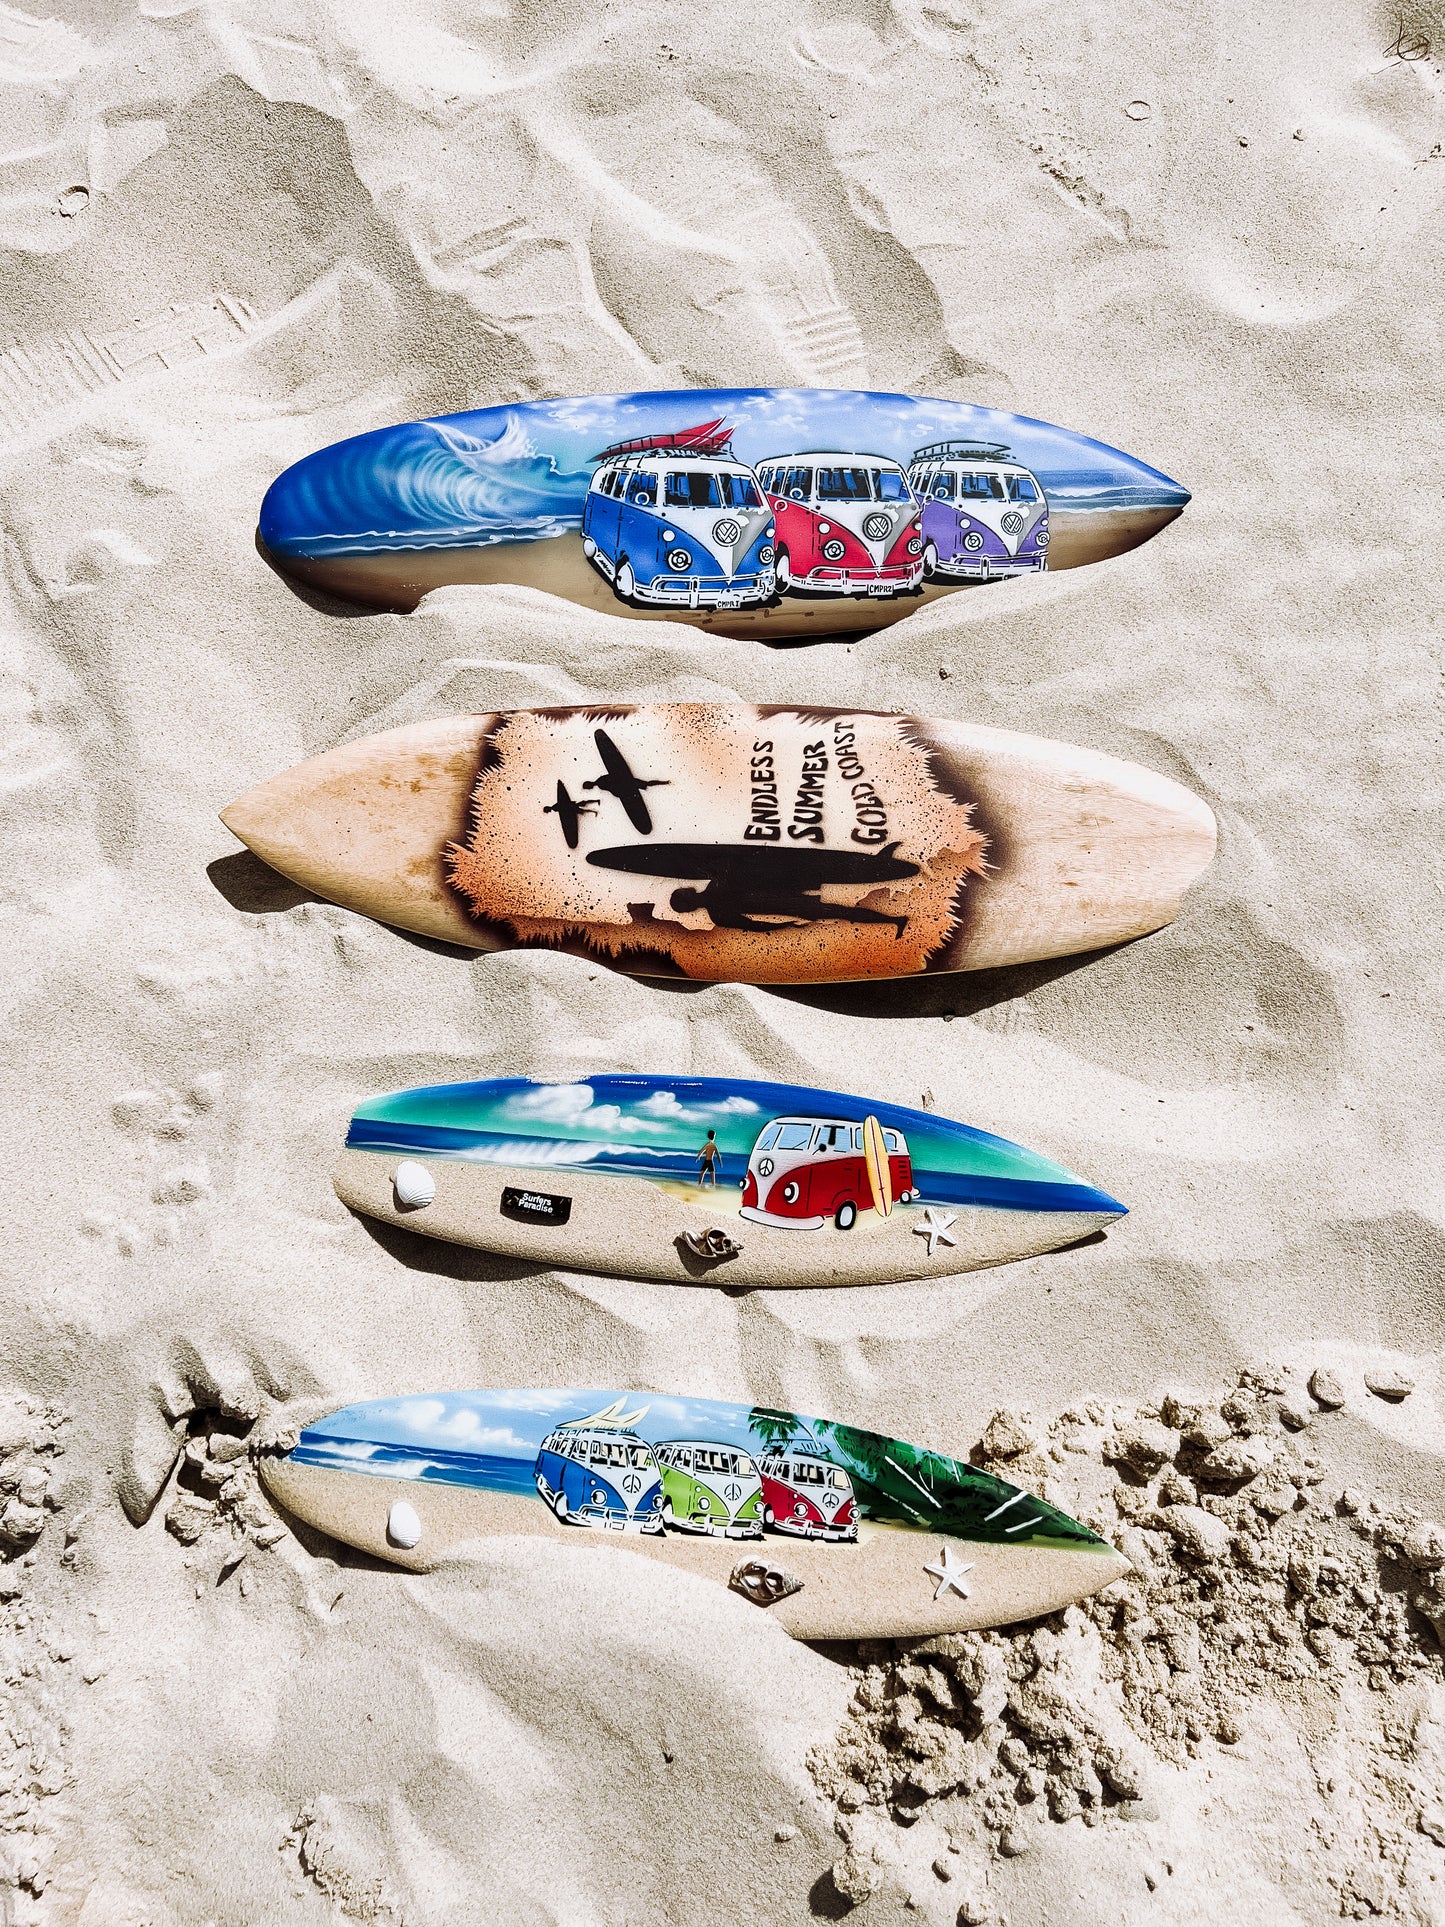 Gold Coast Endless Summer Mahogany Surfboards